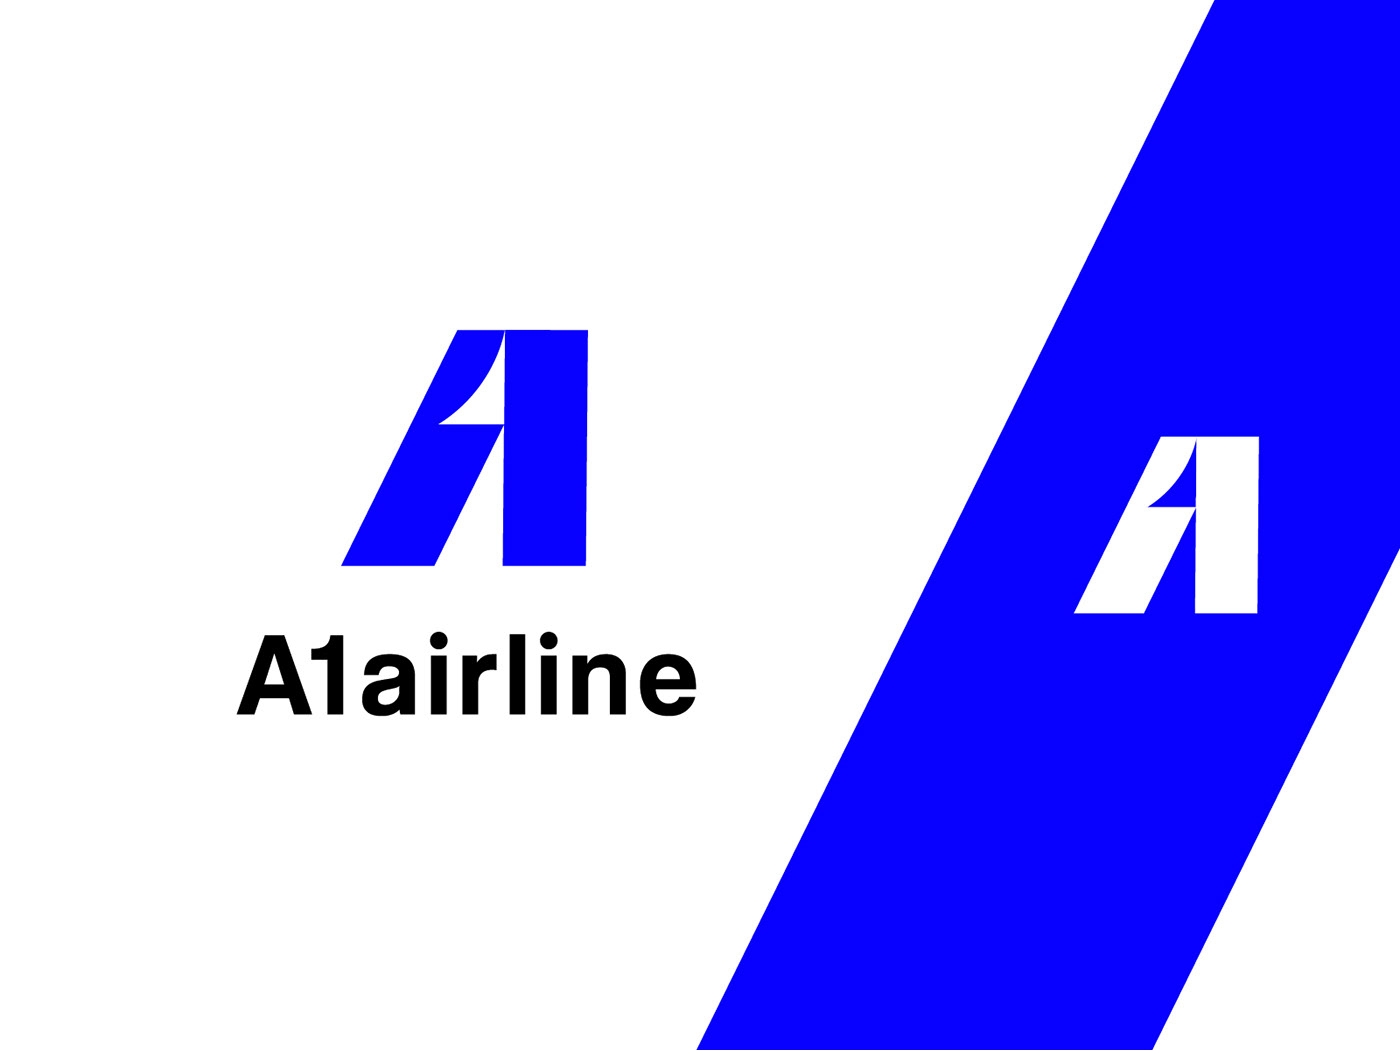 A1 airlines logo airplane brand identity branding  design letter A logo logo Logo Design